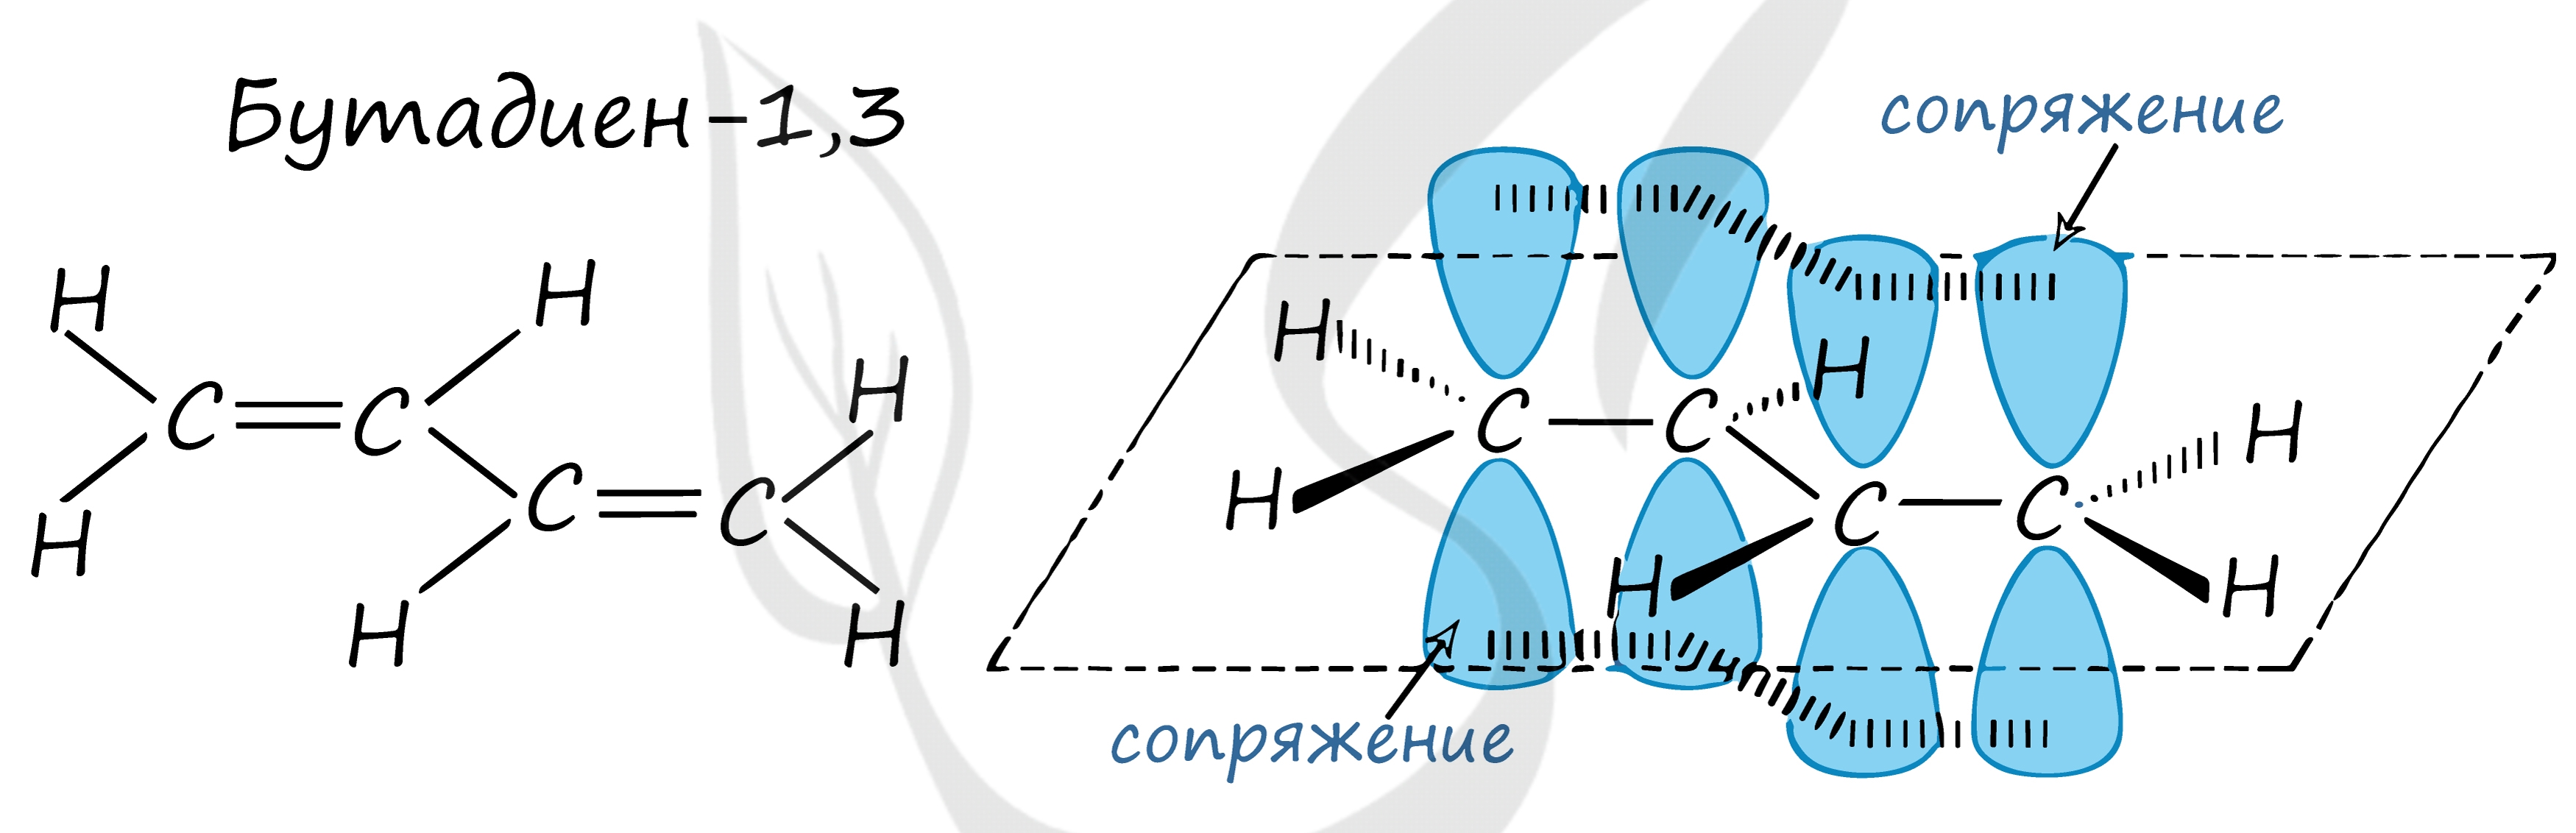 Бутадиен 1 2 гибридизация атомов углерода. Строение молекулы бутадиена 1.3. Электронное строение молекулы бутадиена-1.3. Бутадиен строение молекулы. Схема бутадиена 1.3.